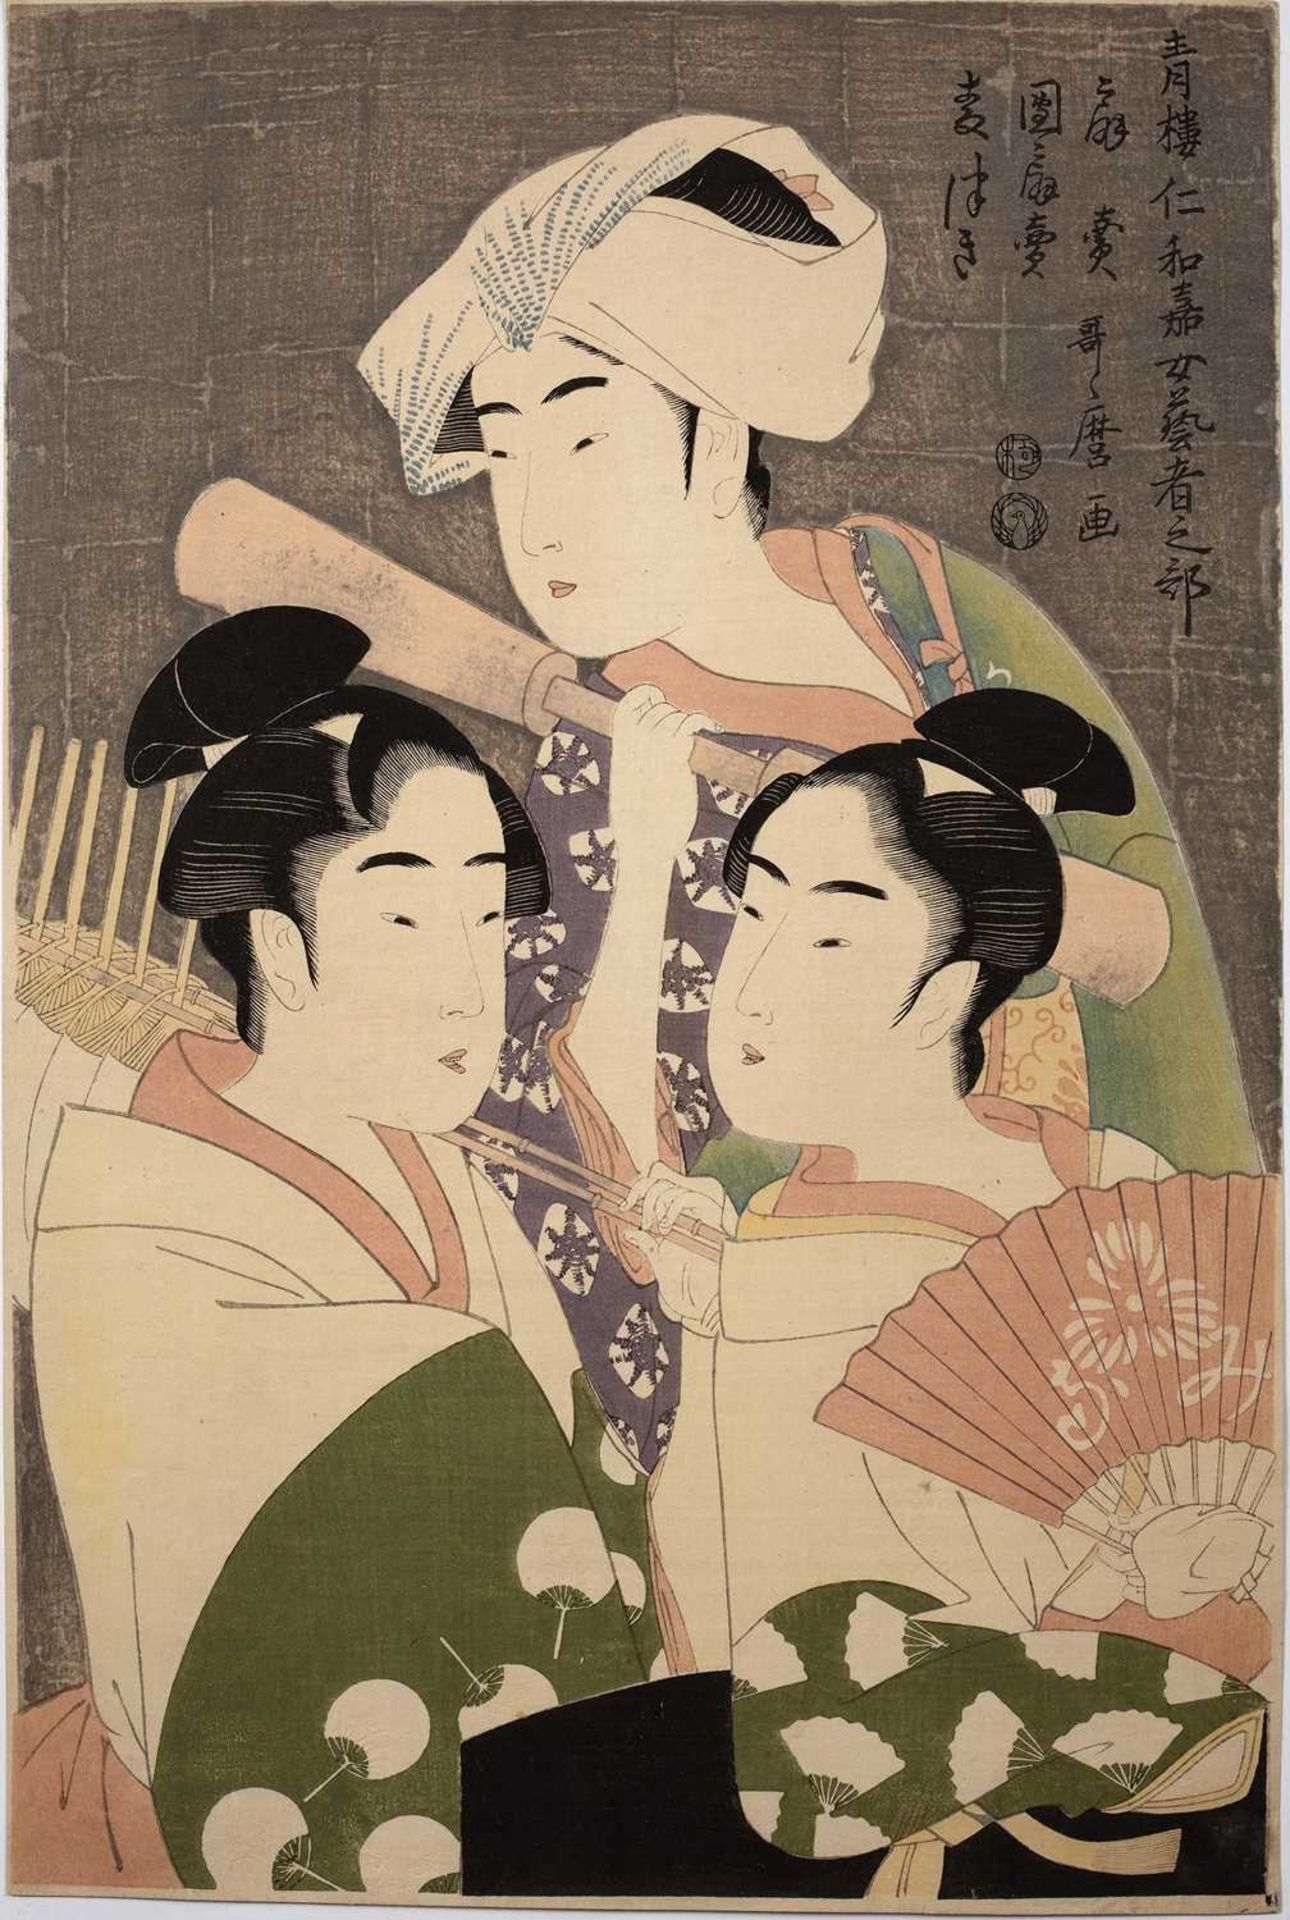 Kitagawa Utamaro (1753-1806) 'The Niwaka Performers', Japanese woodblock print, unframed, 38cm x